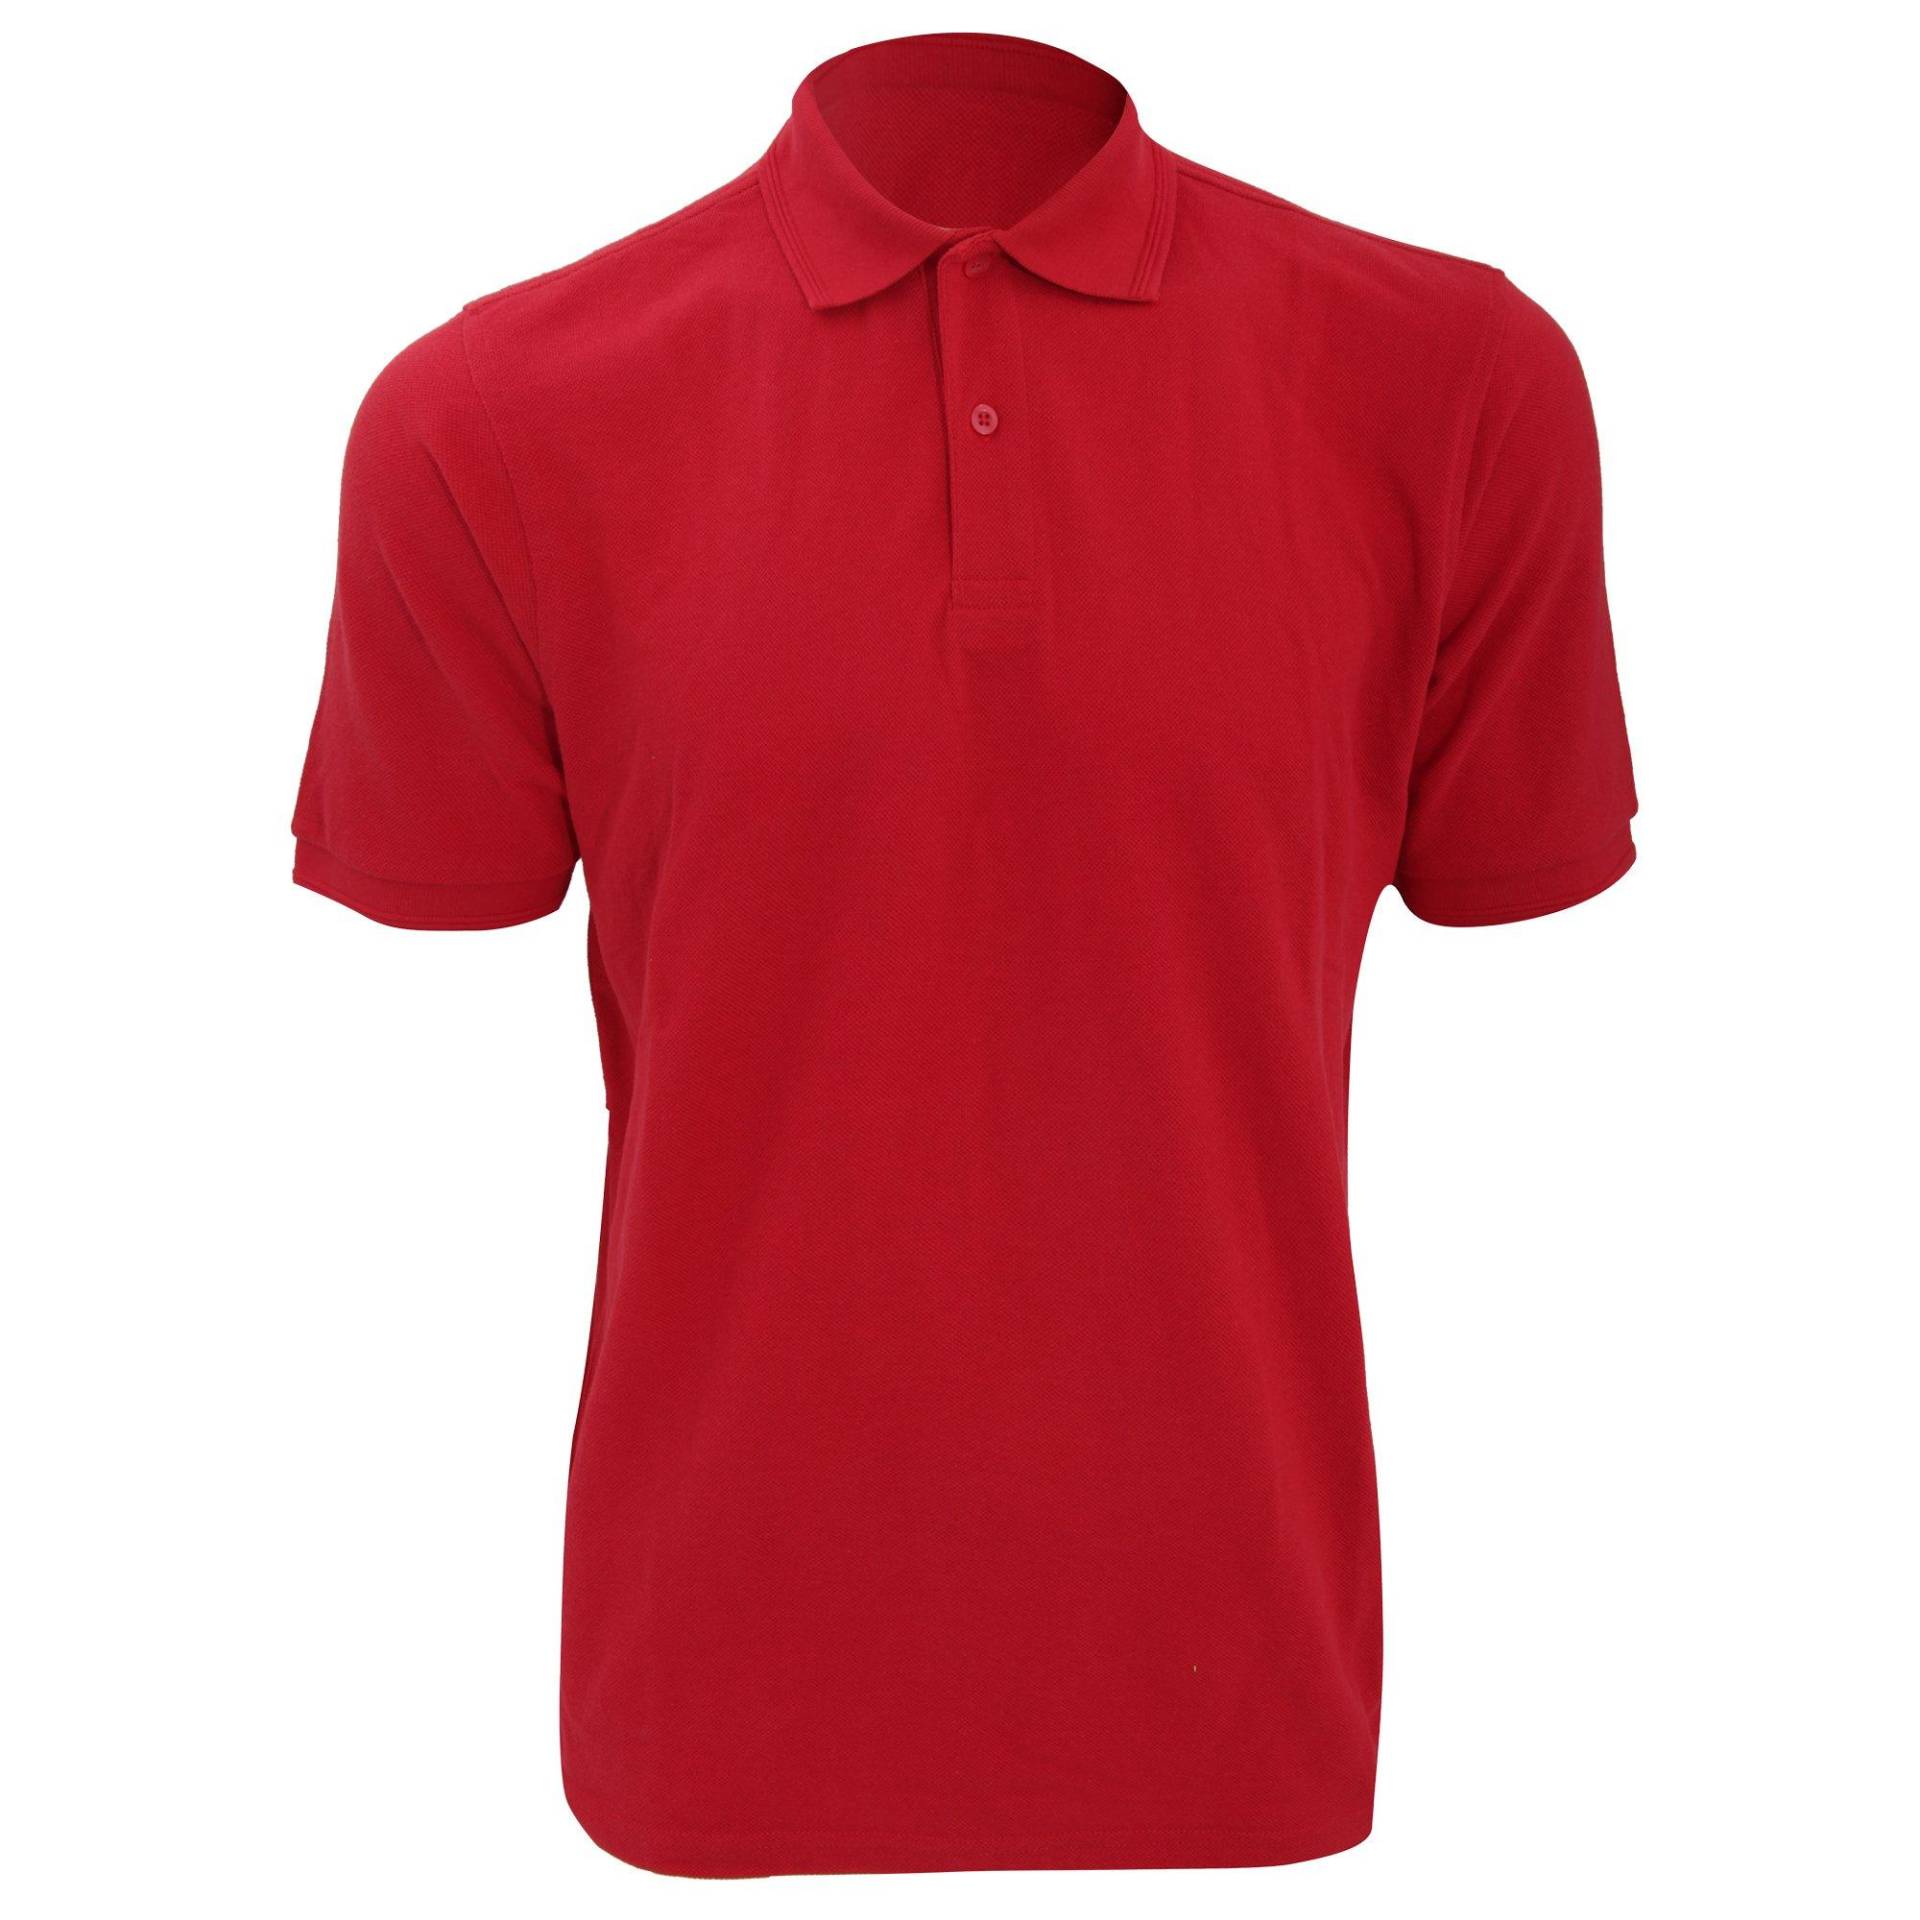 Ripple Collar & Cuff Kurzarm Polo Shirt Herren Rot Bunt XS von Russell